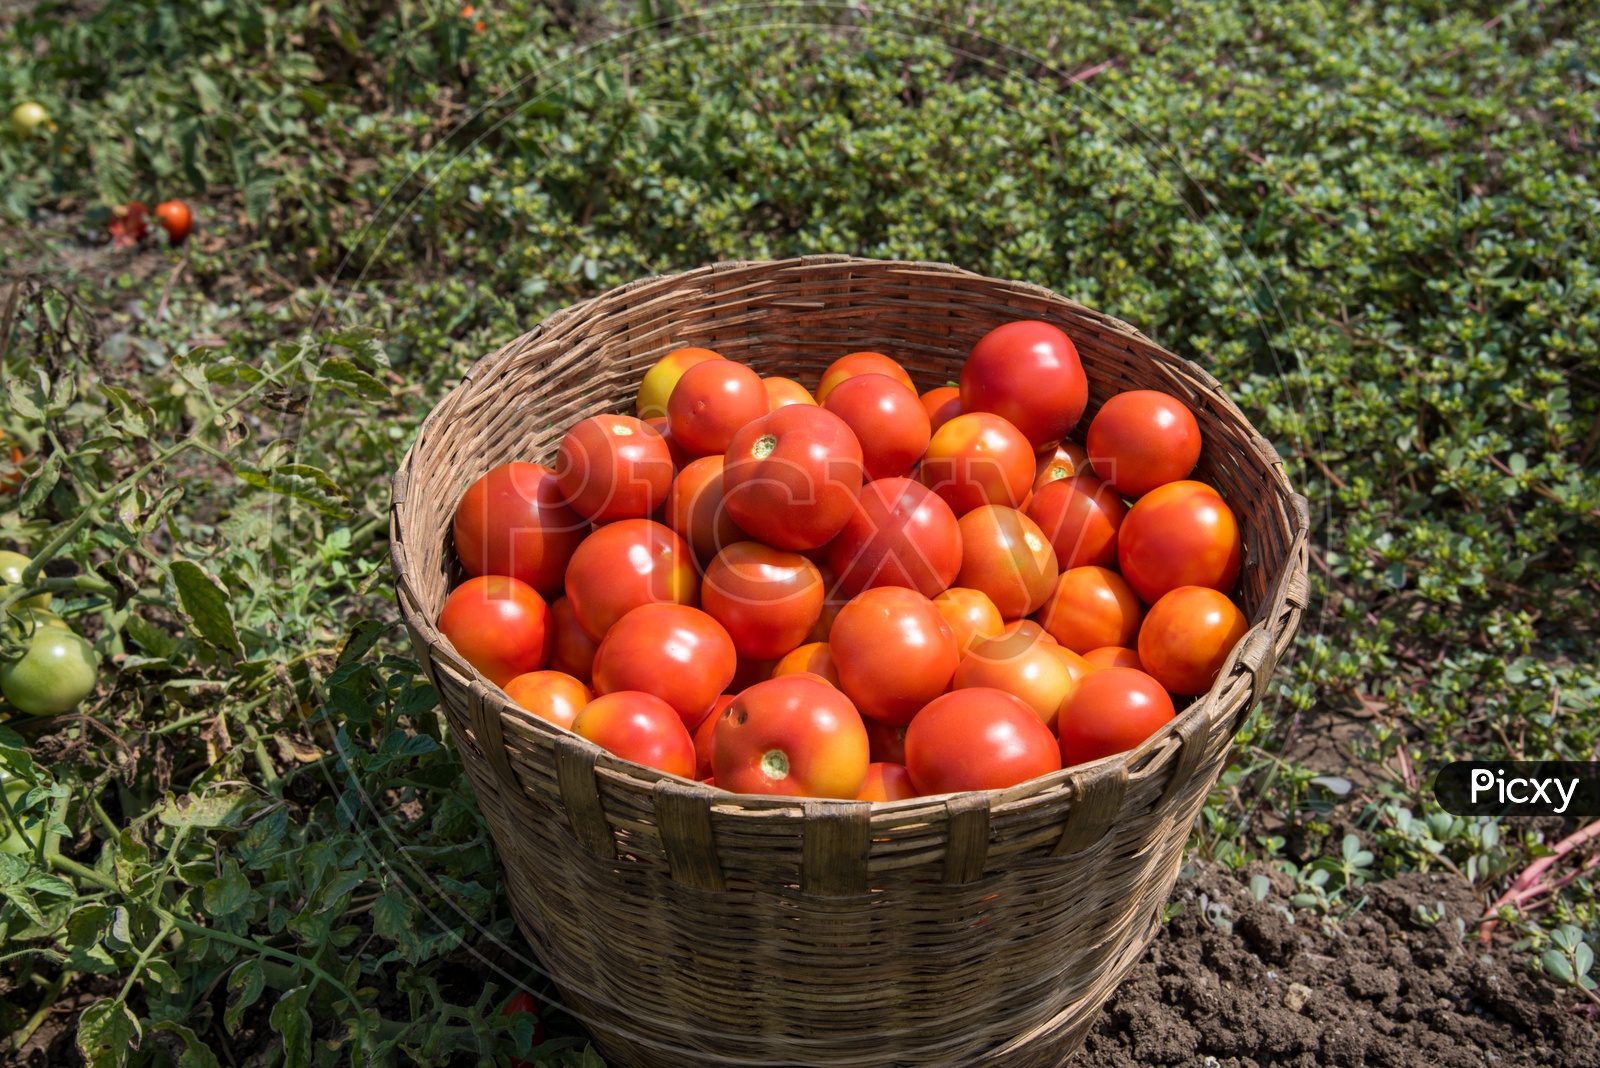 Bucket full of Tomatoes.